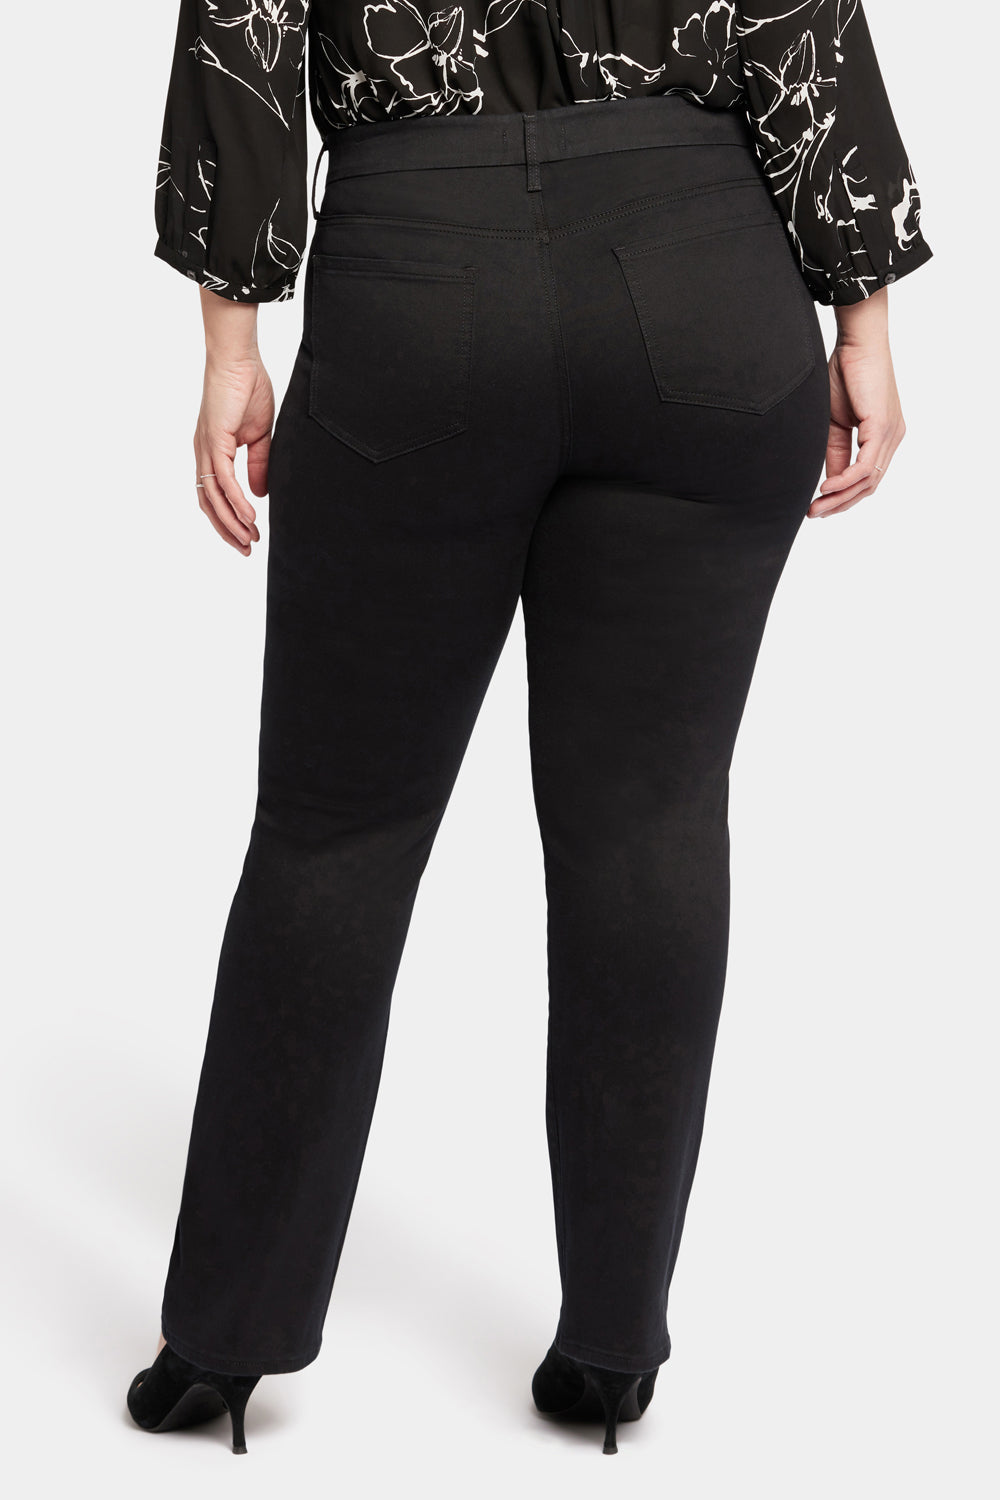 Waist-Match™ Marilyn Straight Jeans In Plus Size - Black Black | NYDJ